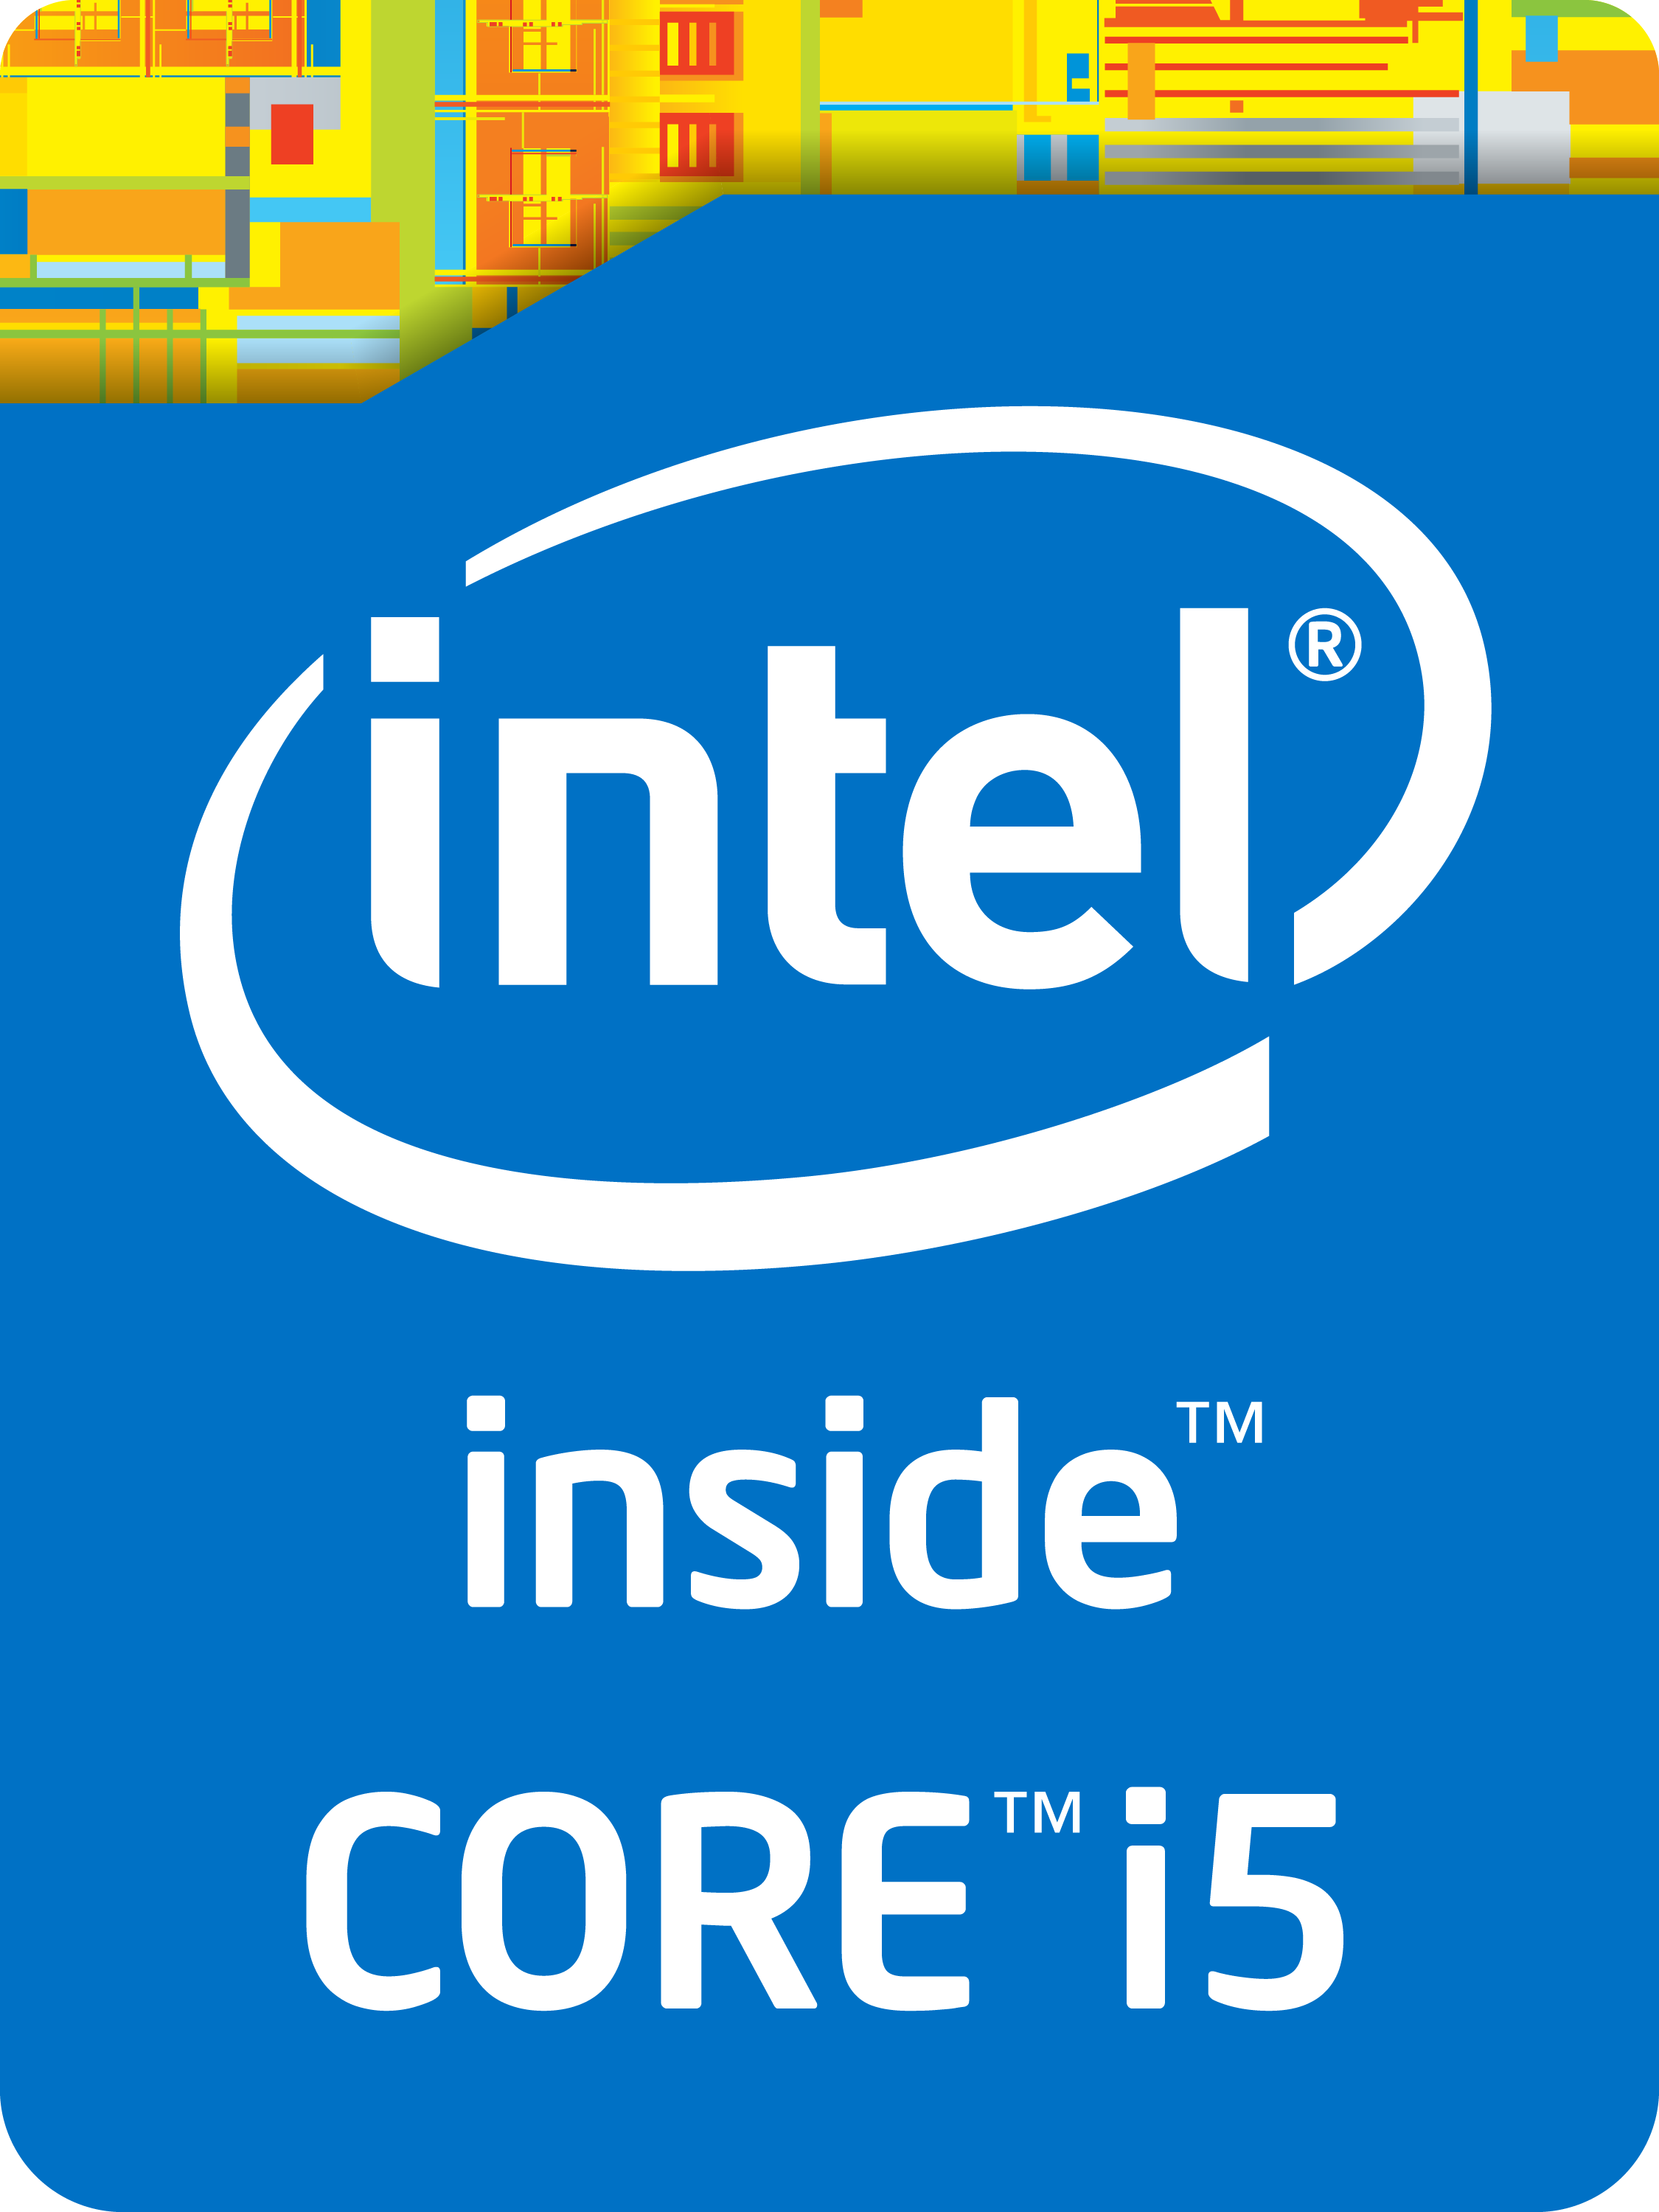 https://www.notebookcheck.net/uploads/tx_nbc2/4th_Generation_Intel___CoreOE_i5_Processor_Badge_06.png